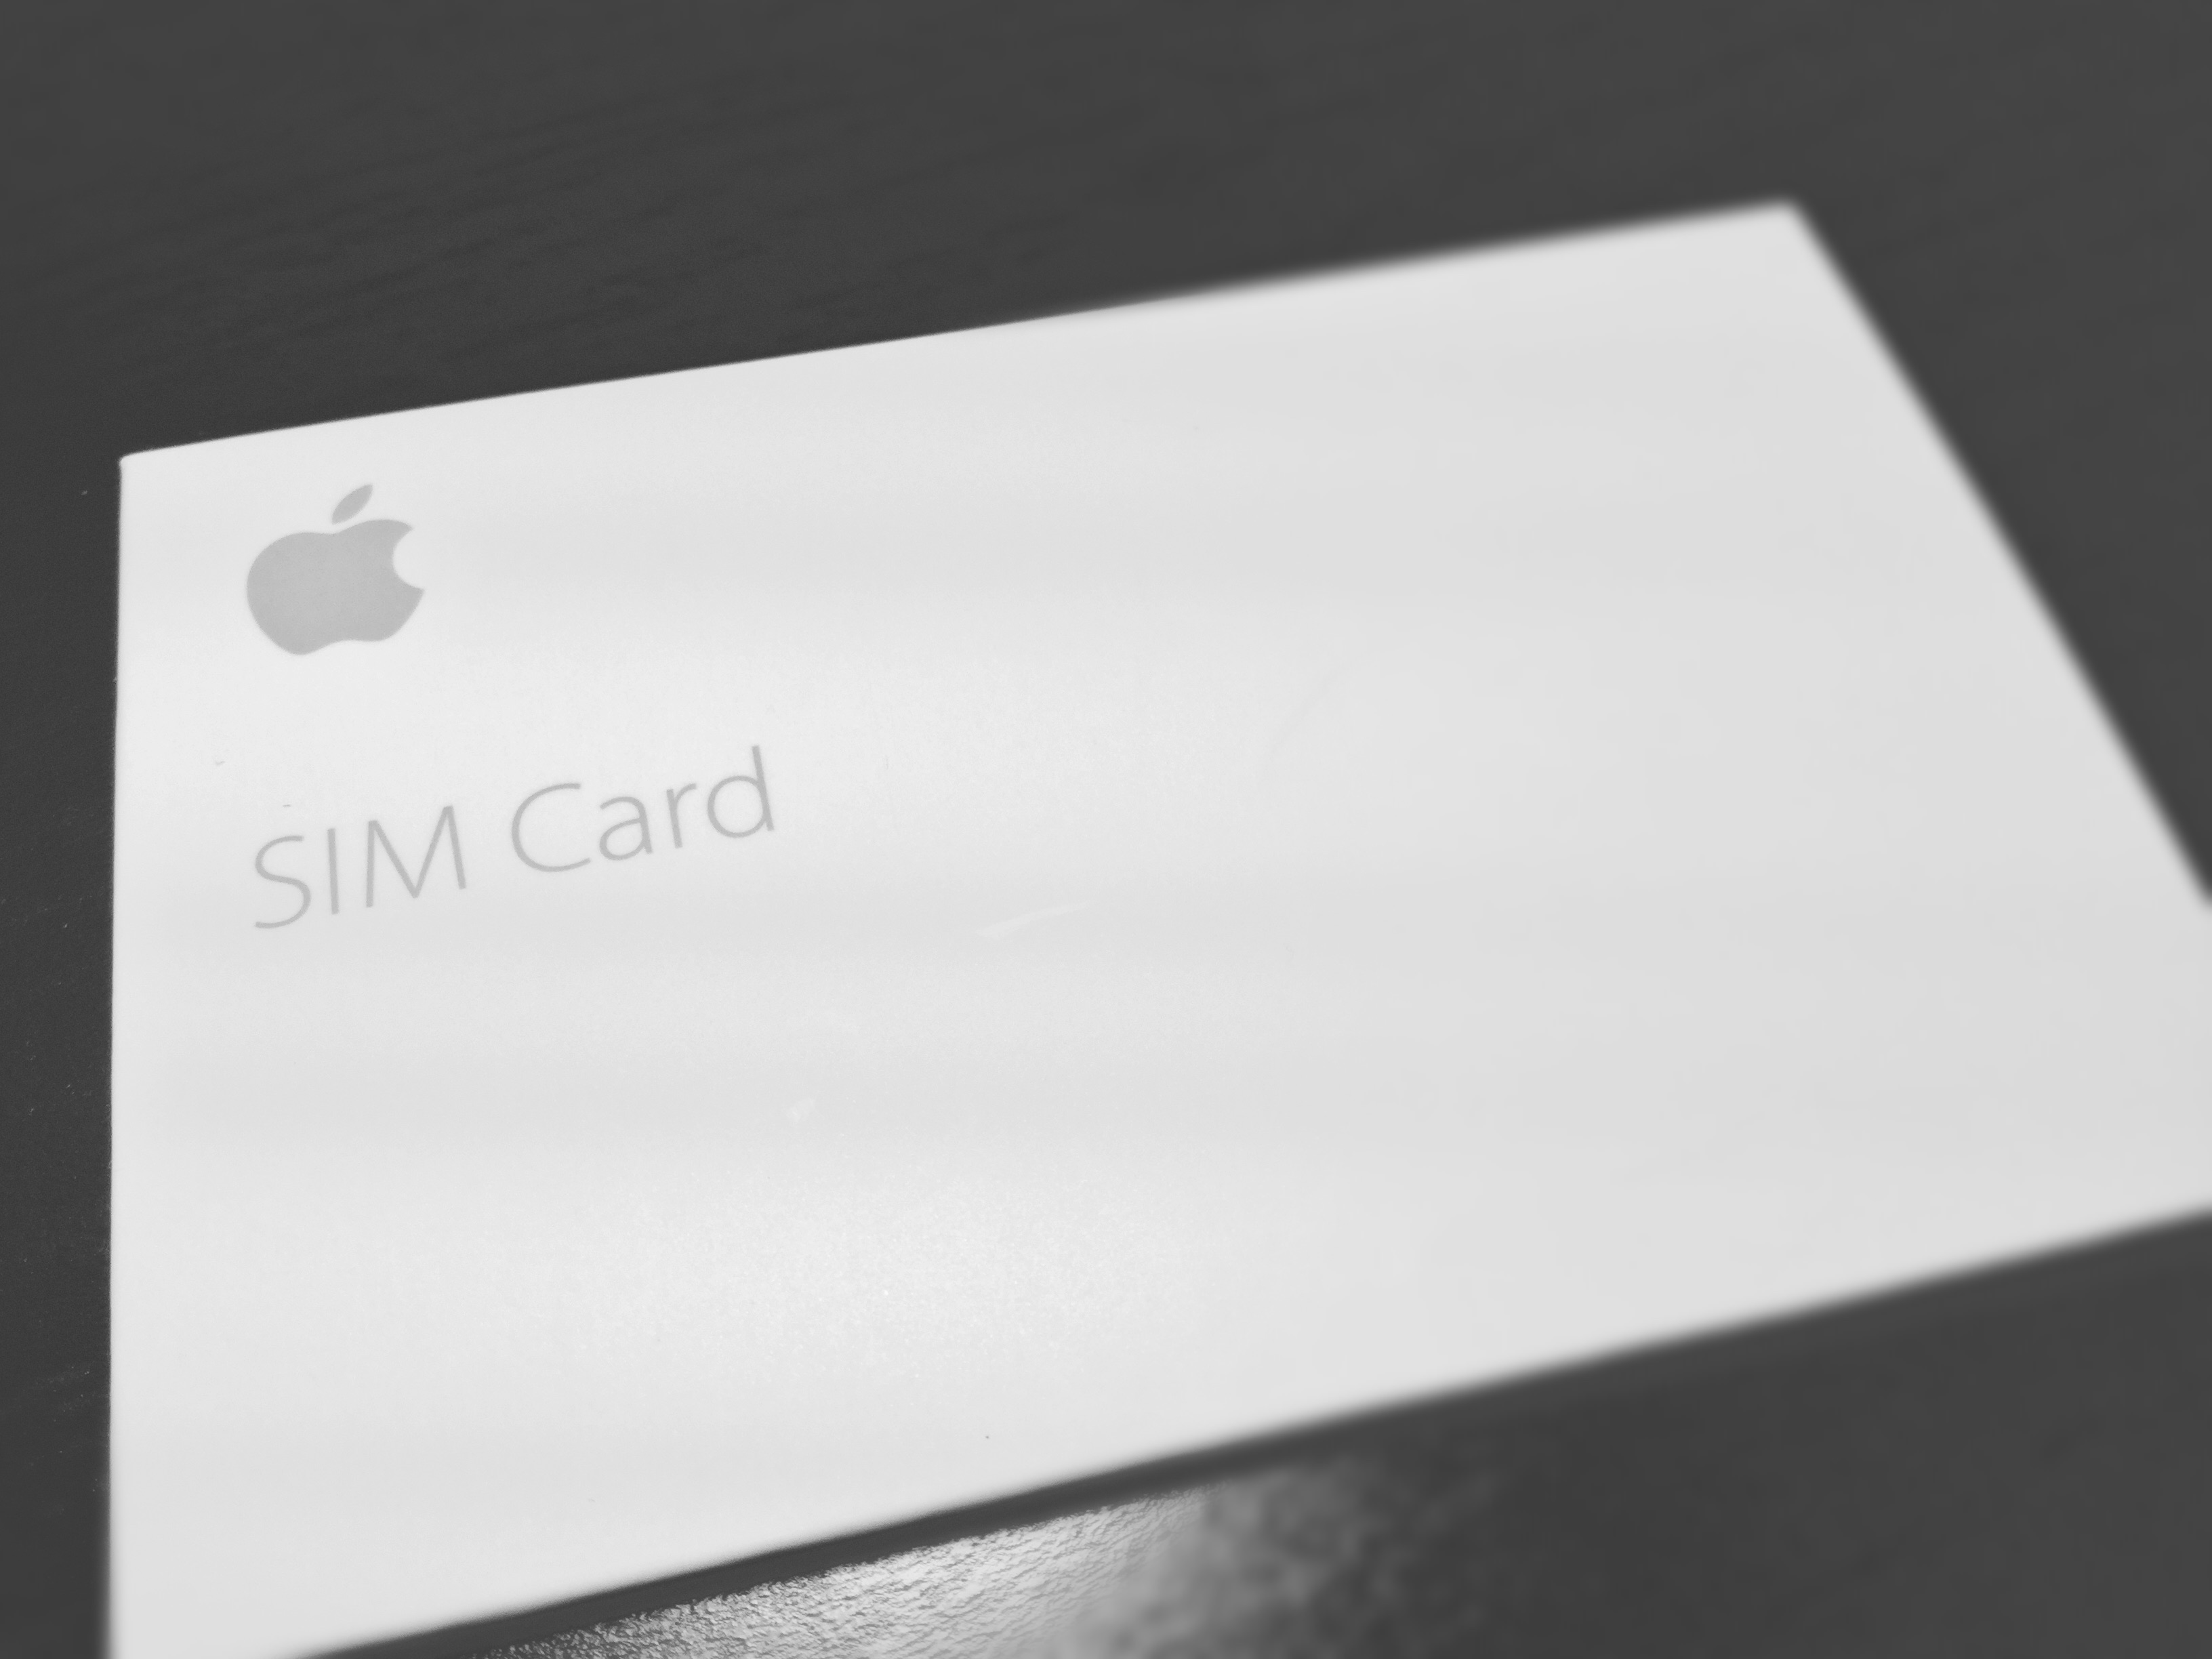 The Apple SIM